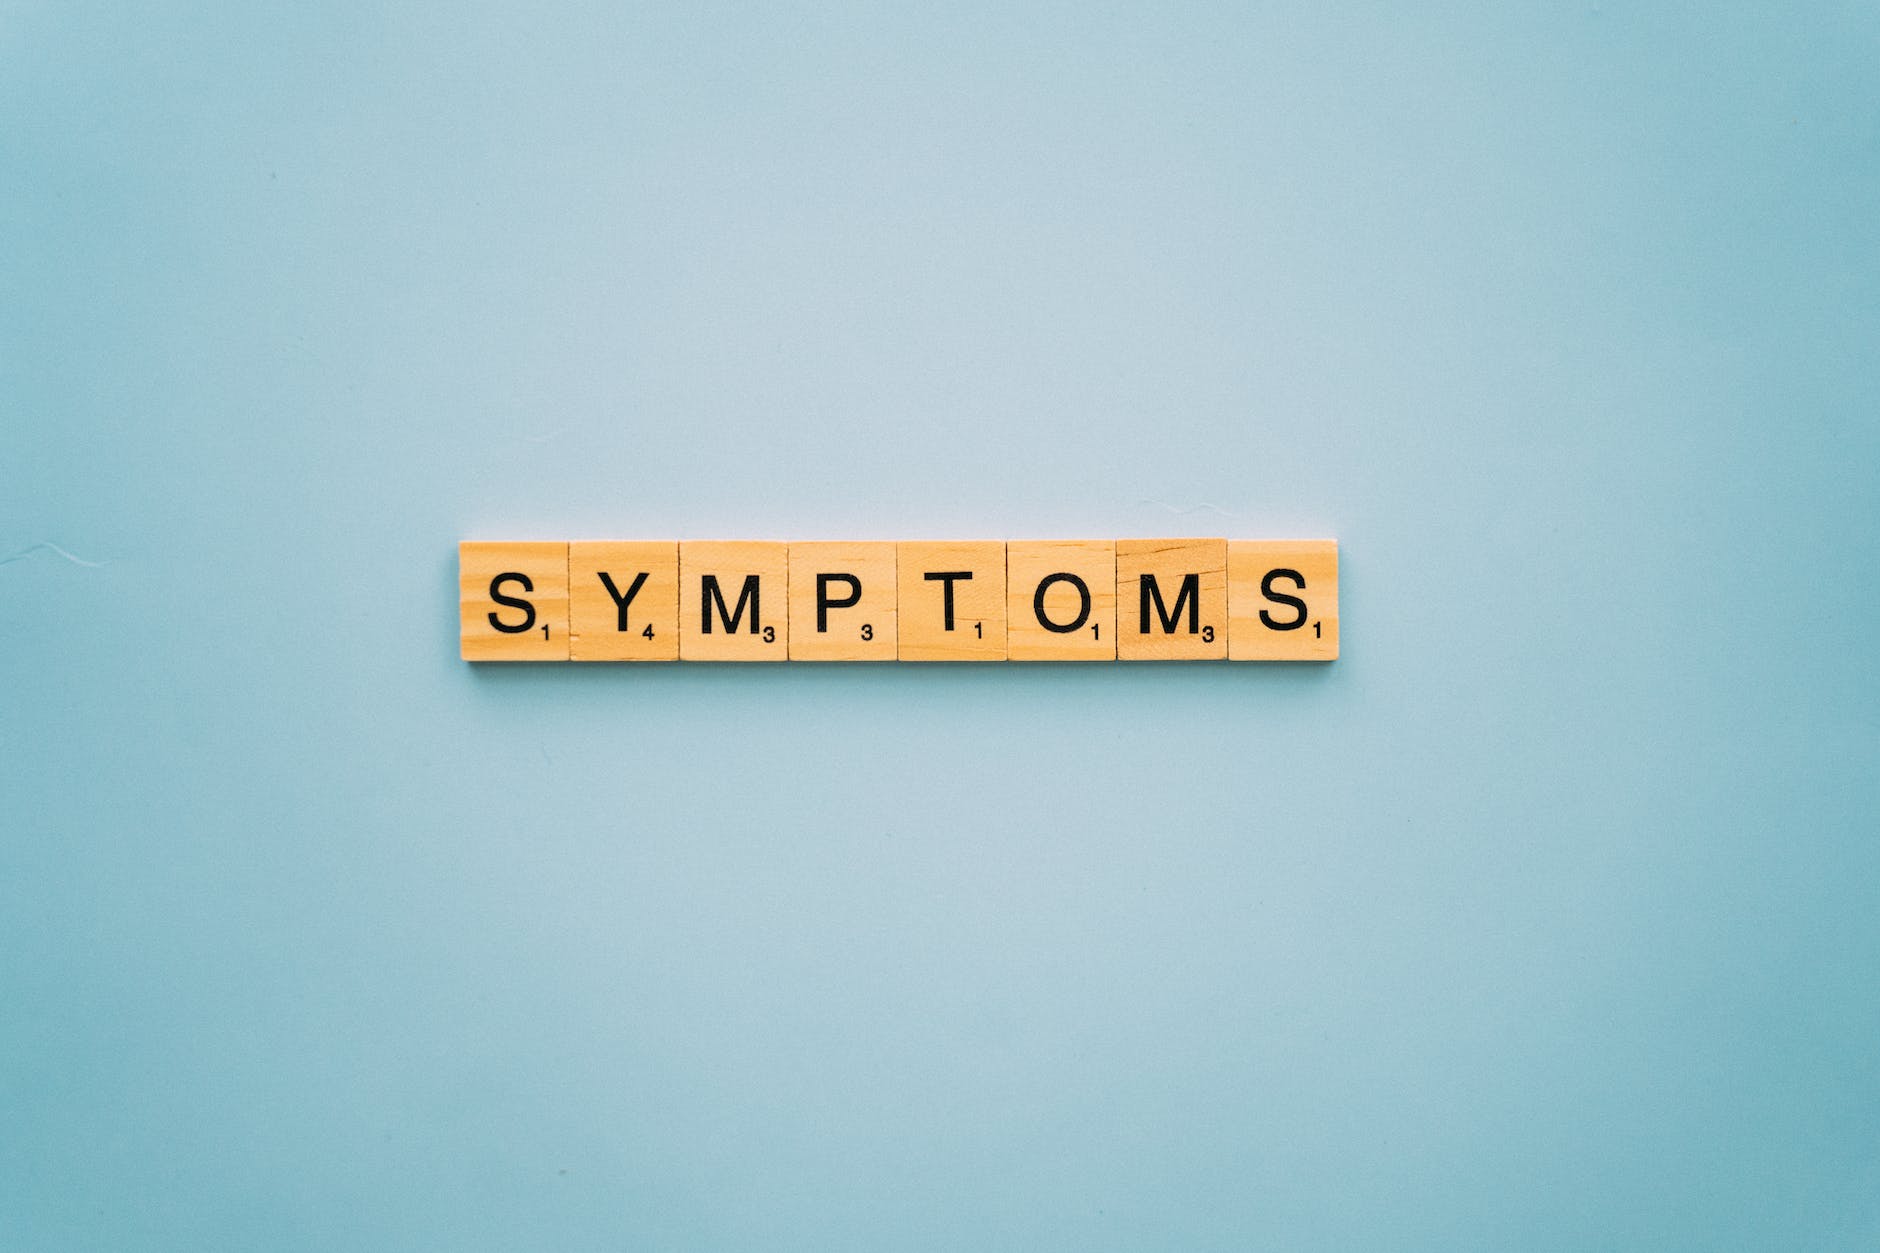 word symptoms in scrabble tiles